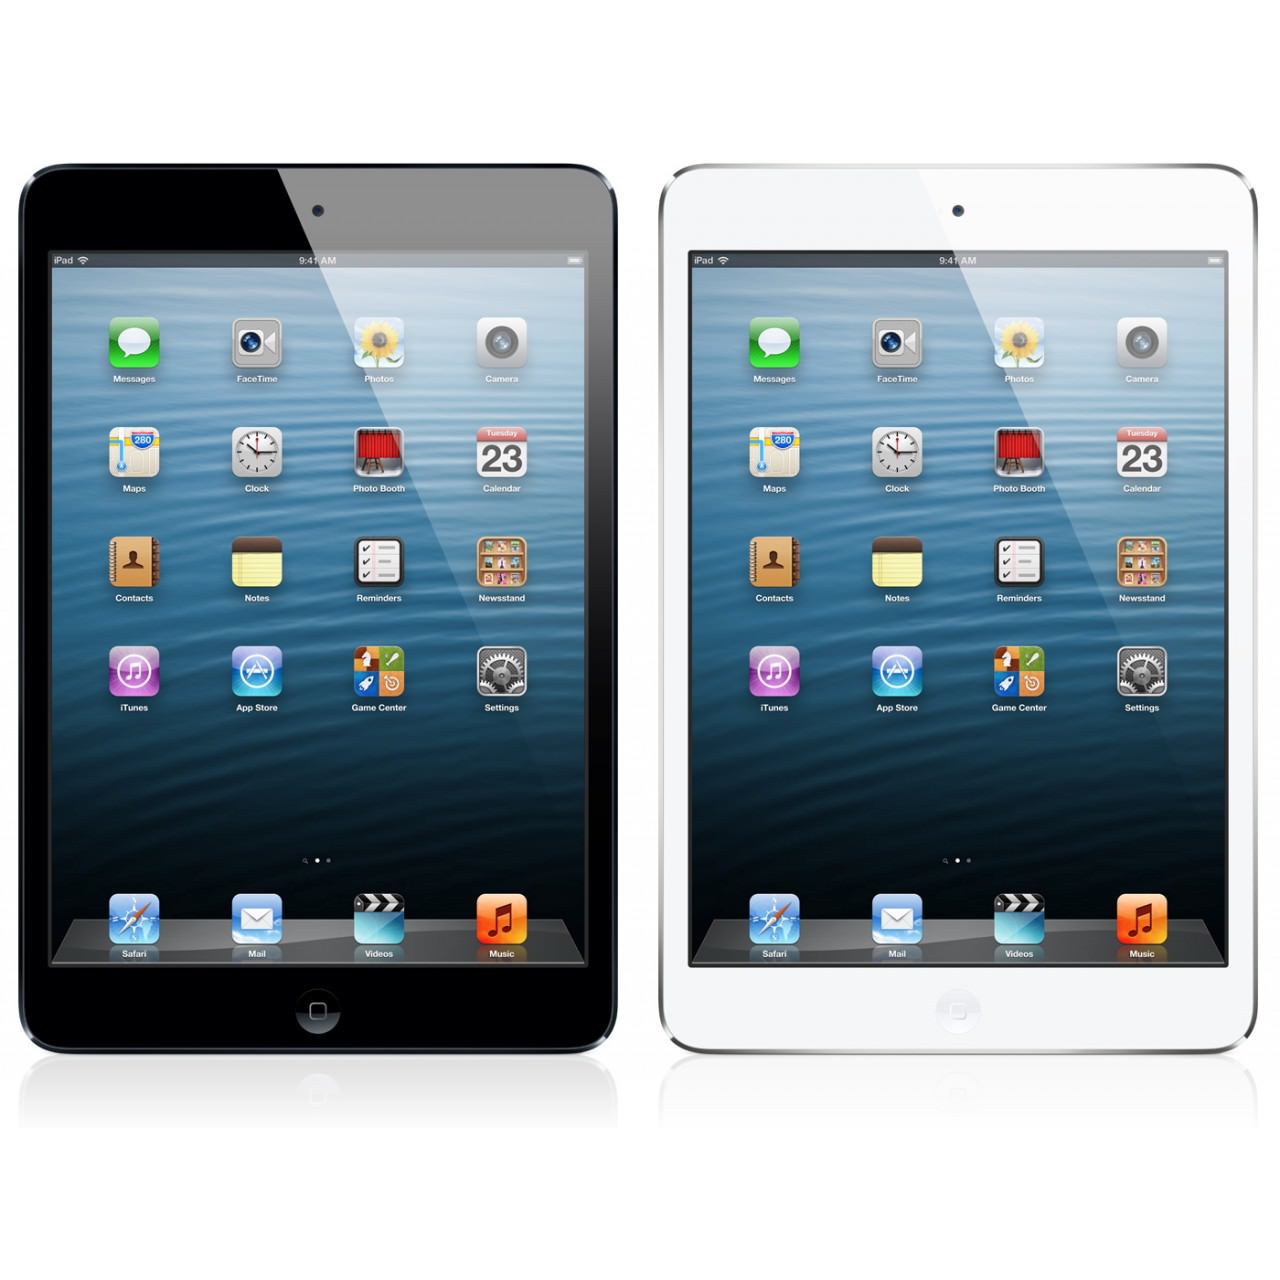 Ancora rumors sui nuovi iPad 1